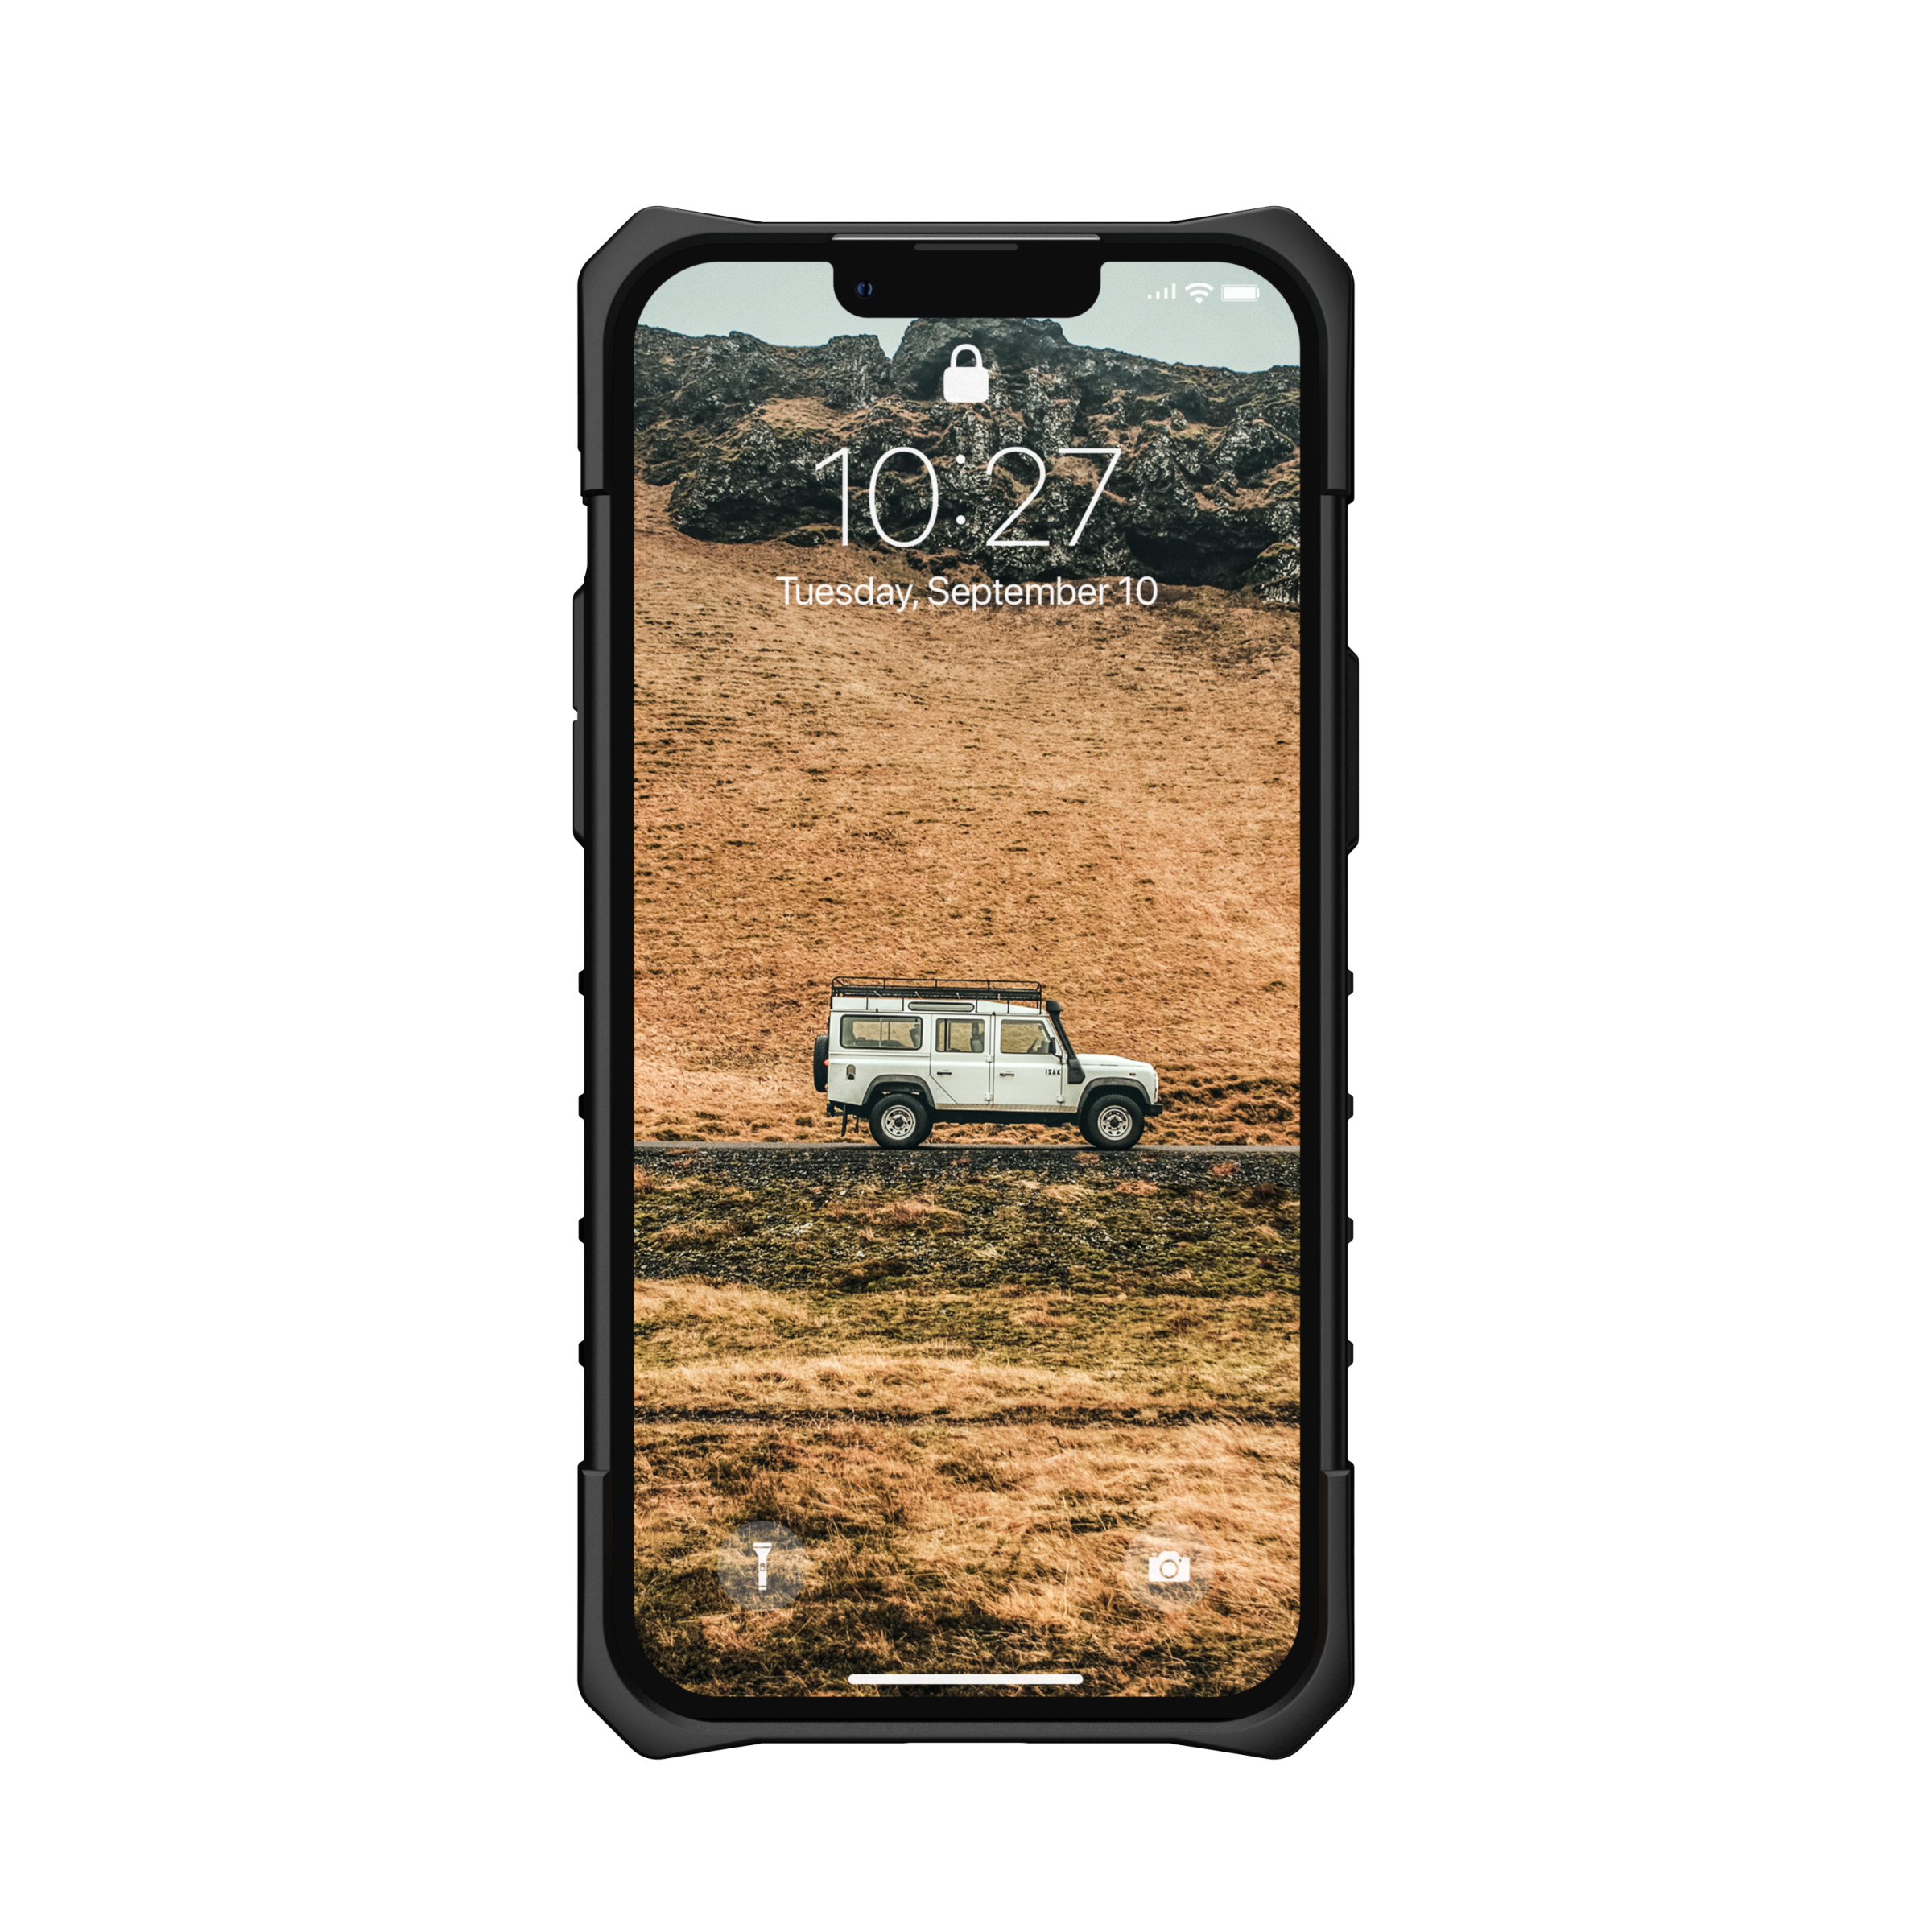 Pathfinder Series Case iPhone 13 Pro Max Black